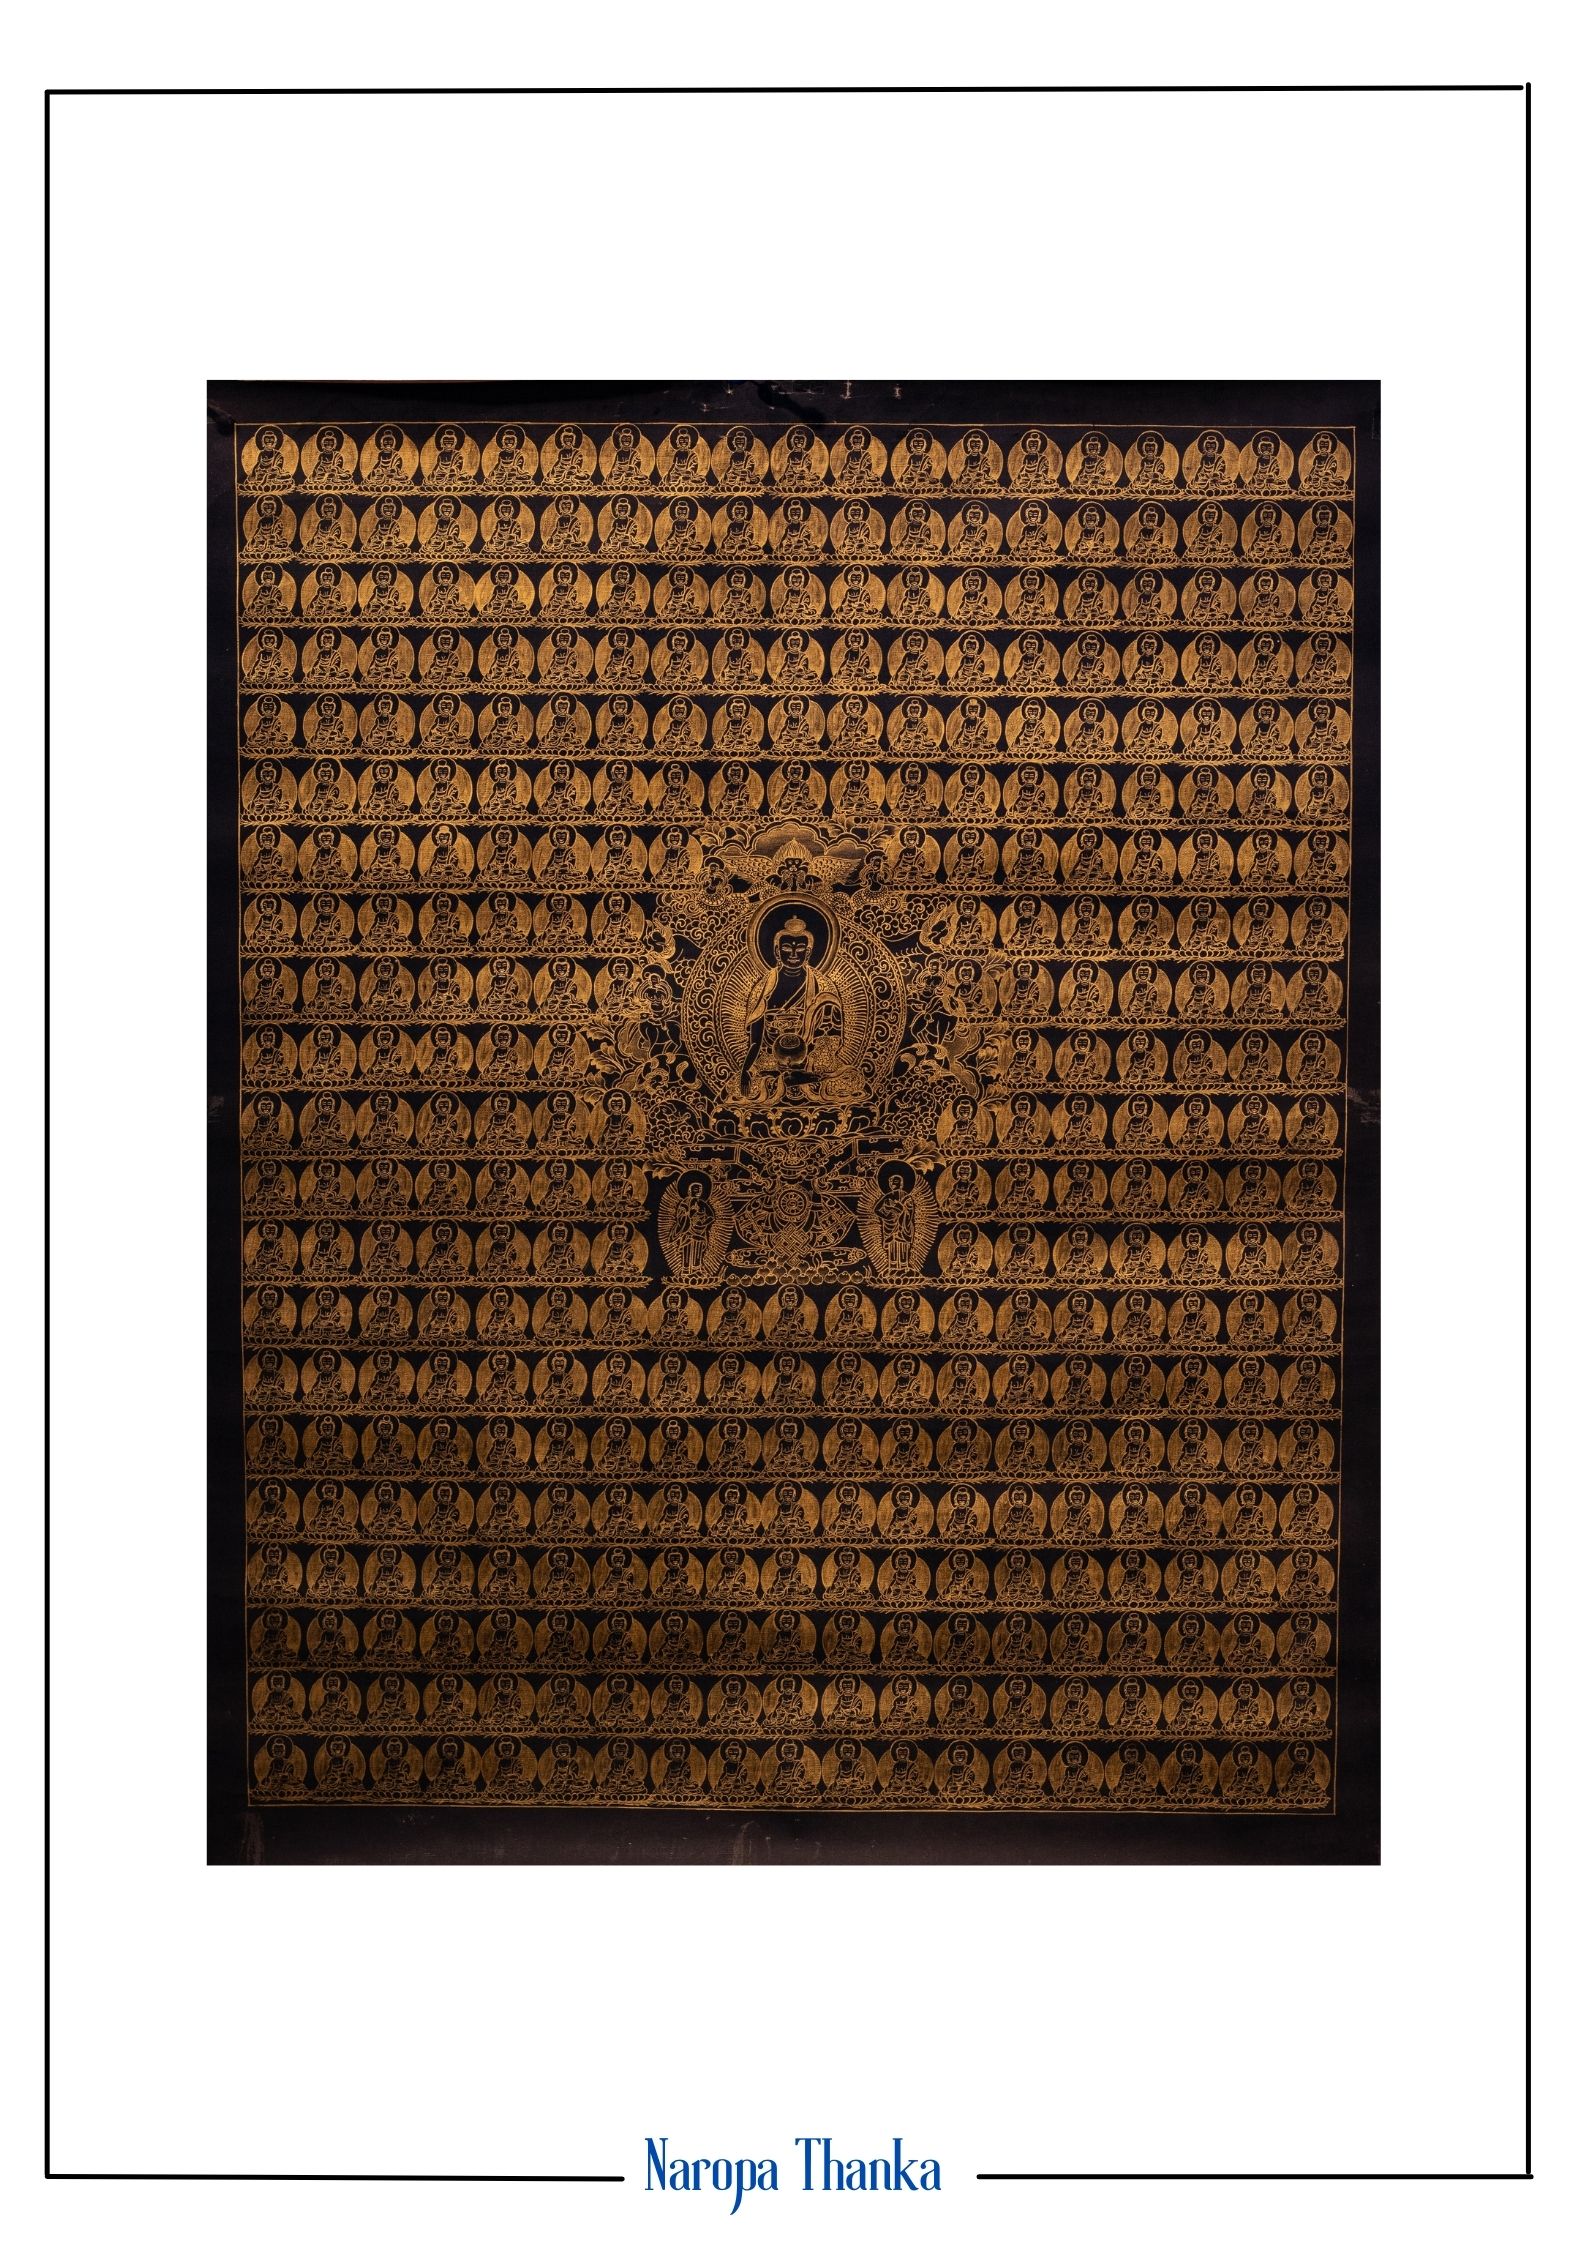 365 Sakyamuni Buddha (Siddartha Gautam Buddha), 24k Gold Paintings, Black and Gold,Tibetan Thangka 51*41cm